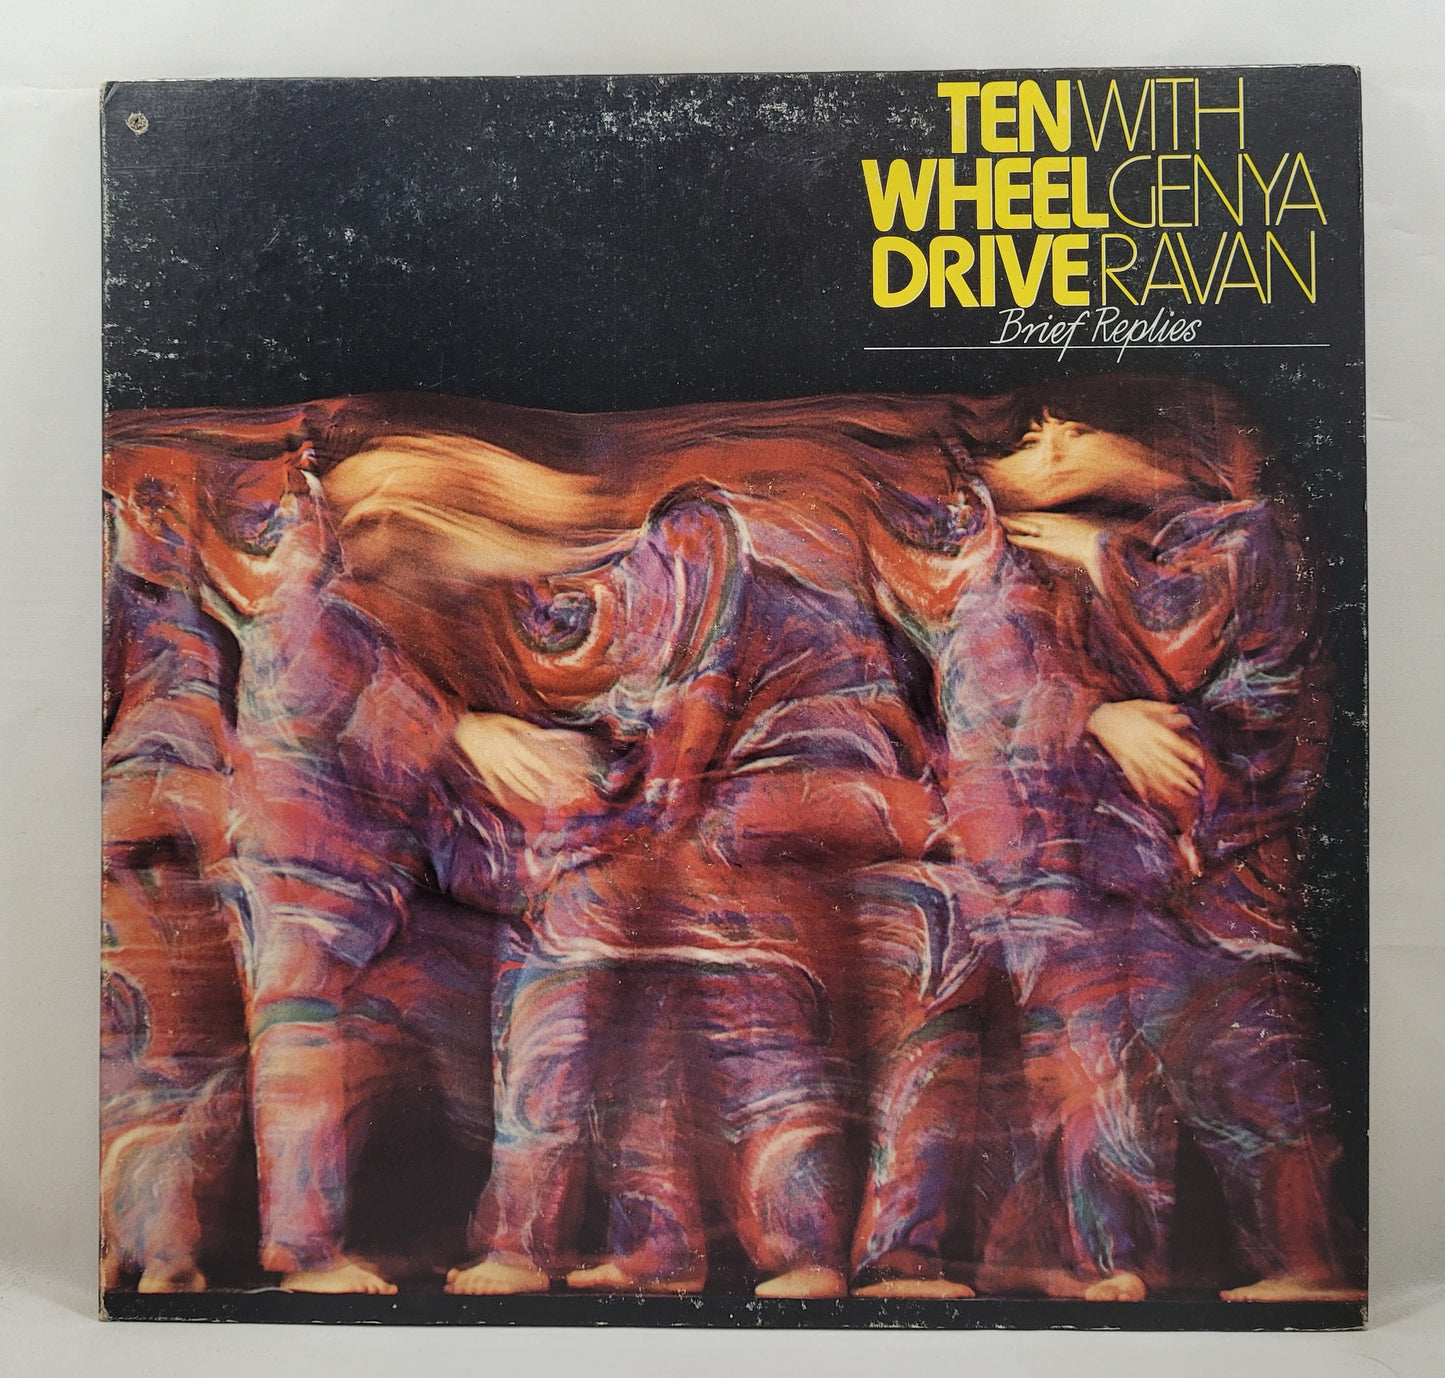 Ten Wheel Drive With Genya Raven - Brief Replies [1970 Used Vinyl Record LP]